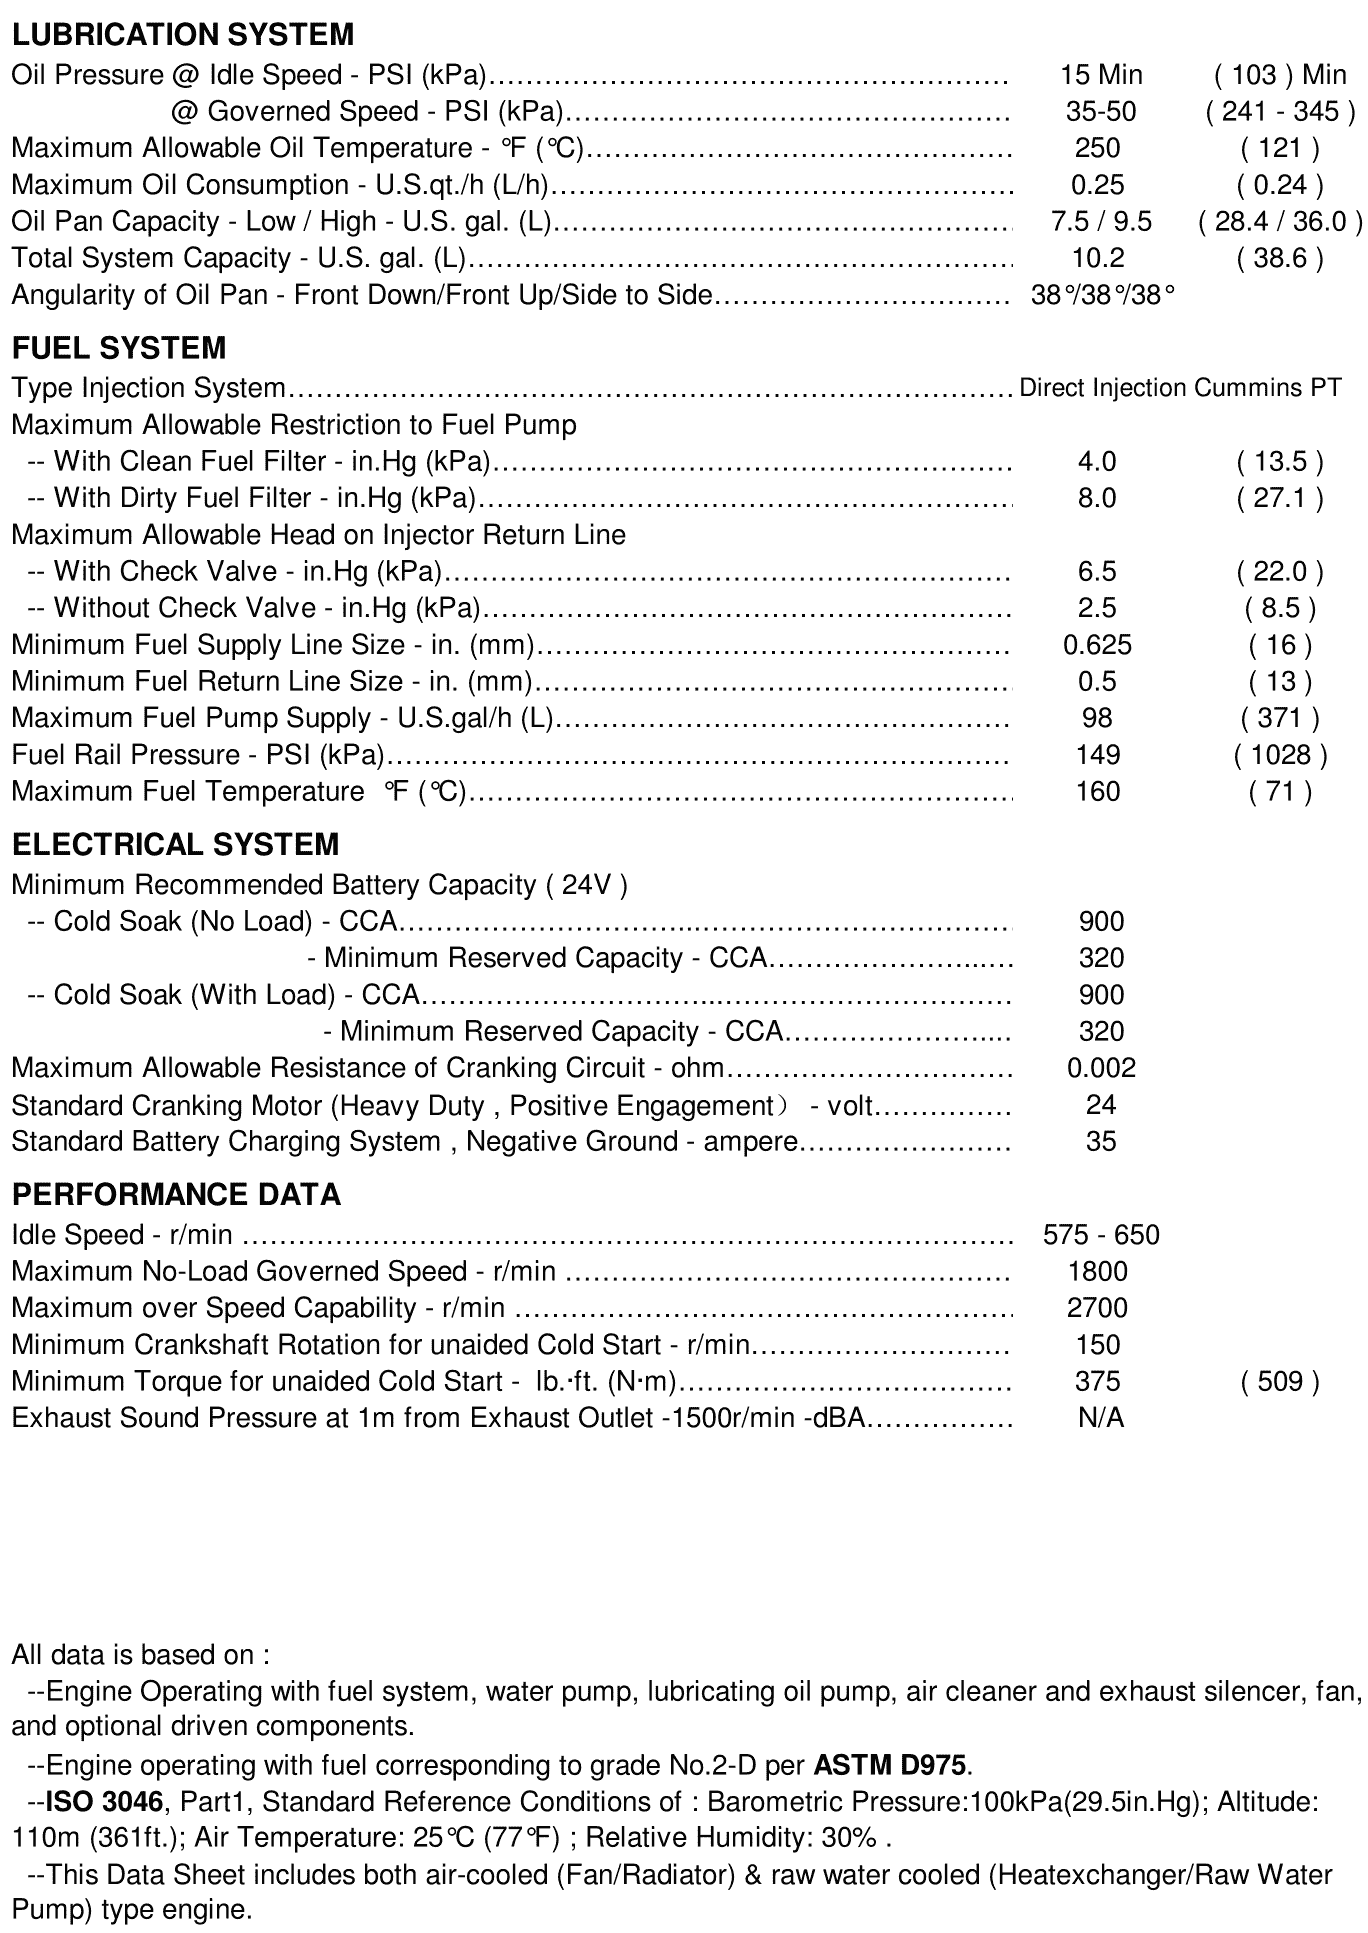 Cummins NTAA855-G7 343kW datasheet